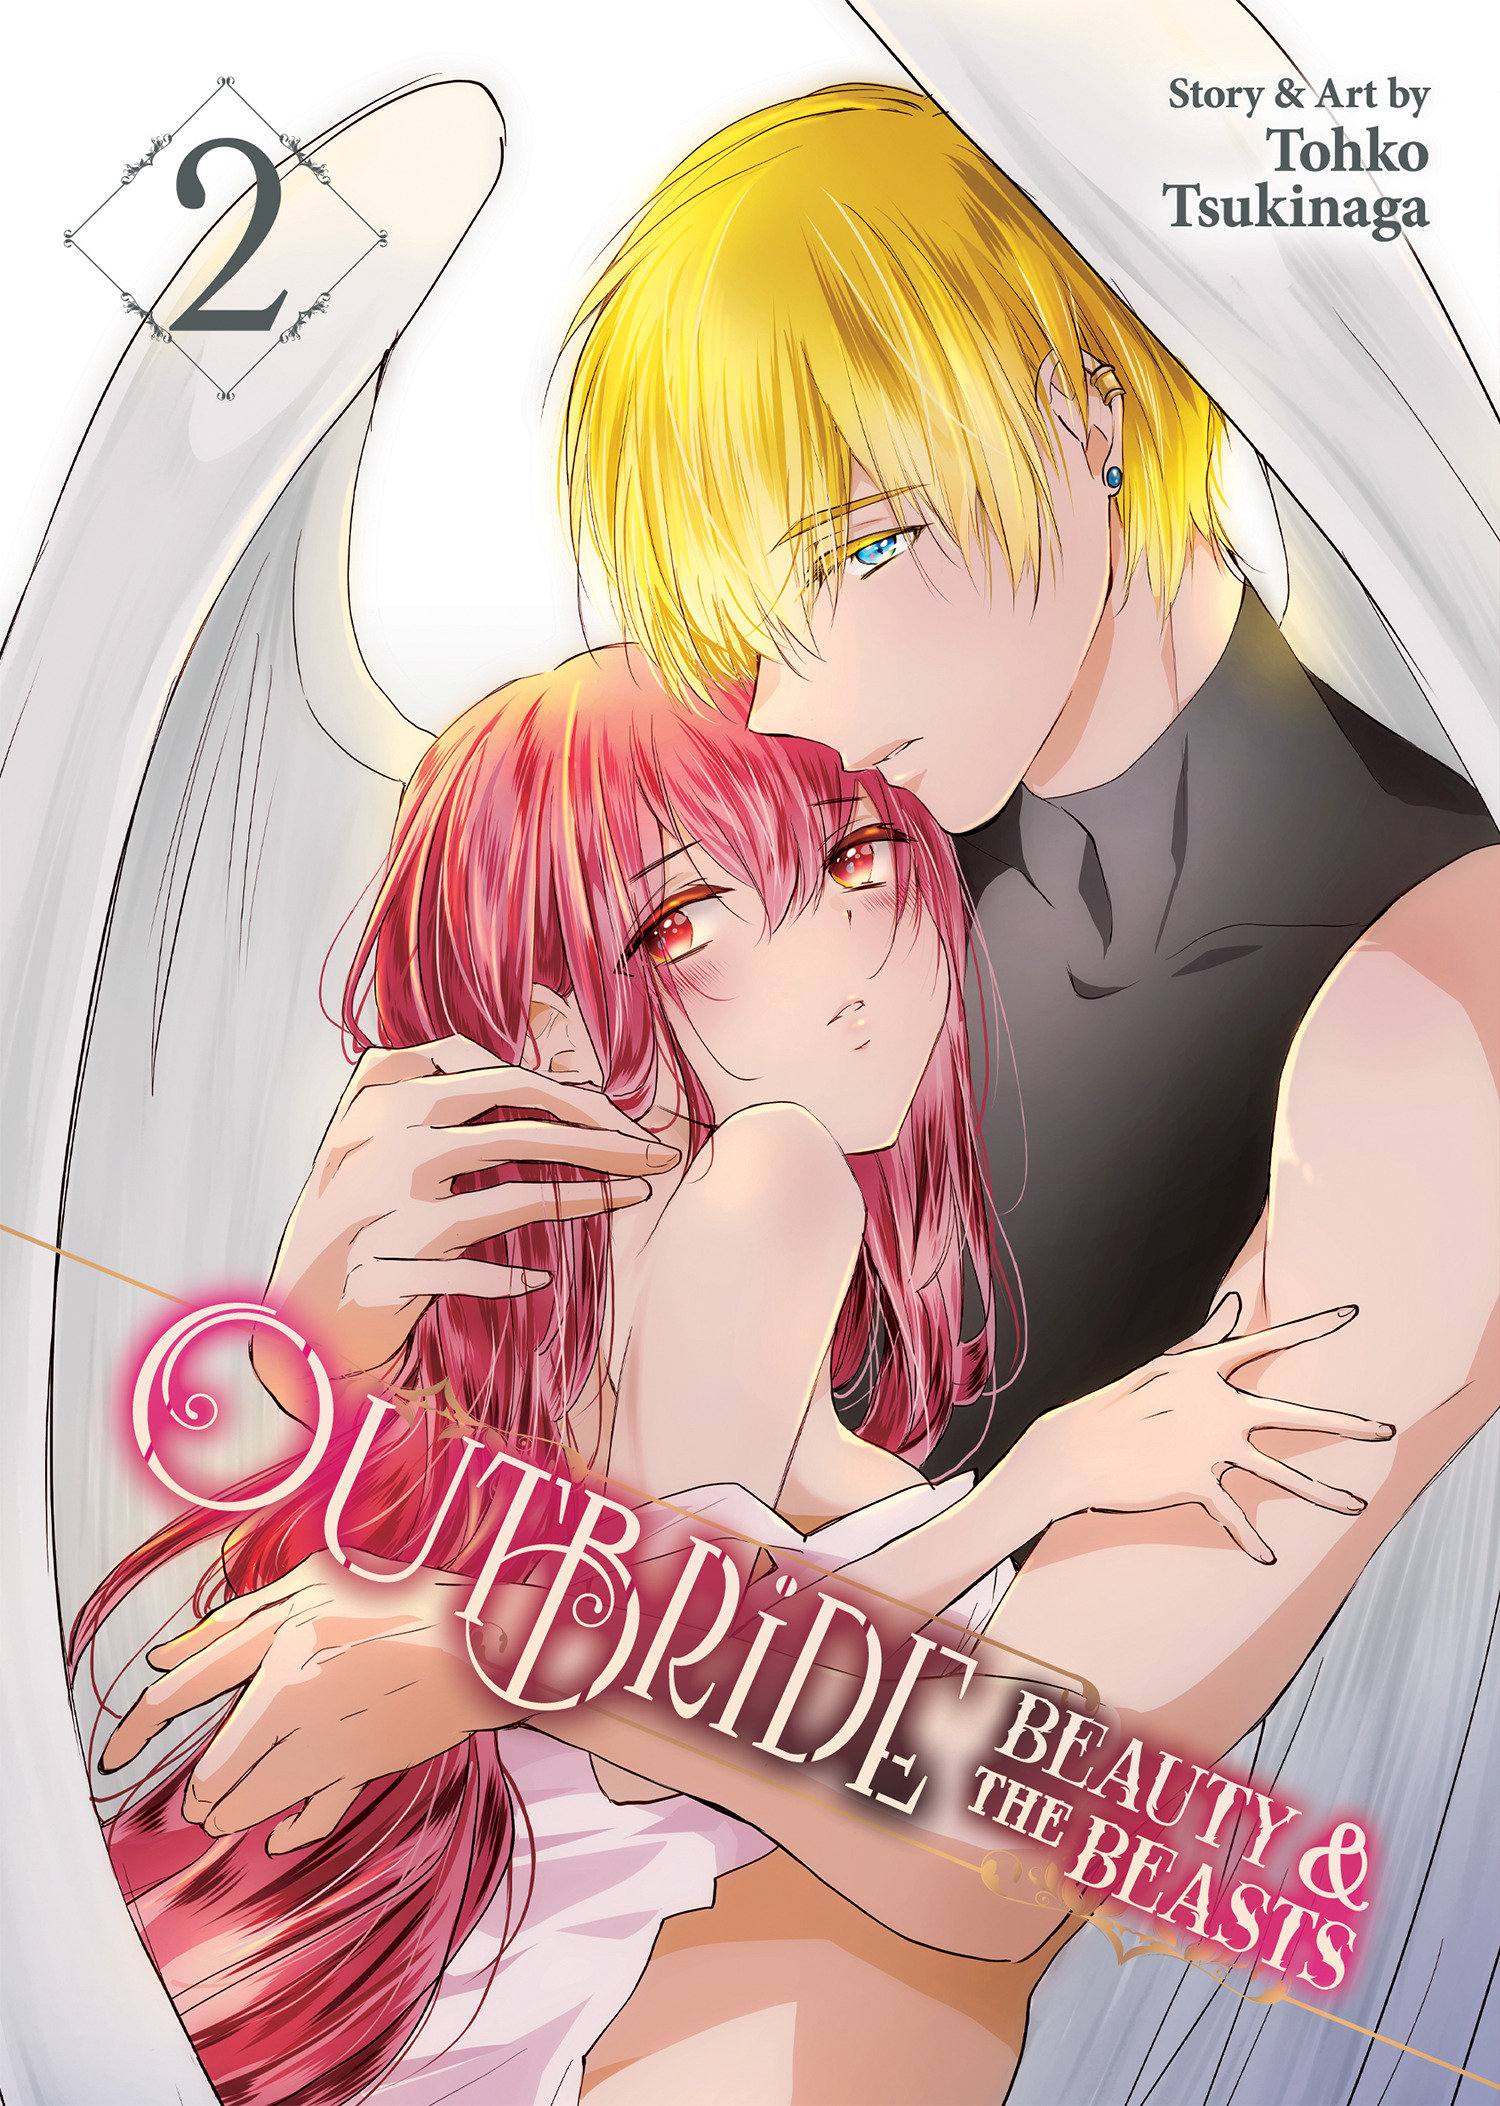 Outbride Beauty & Beasts Manga Volume 2